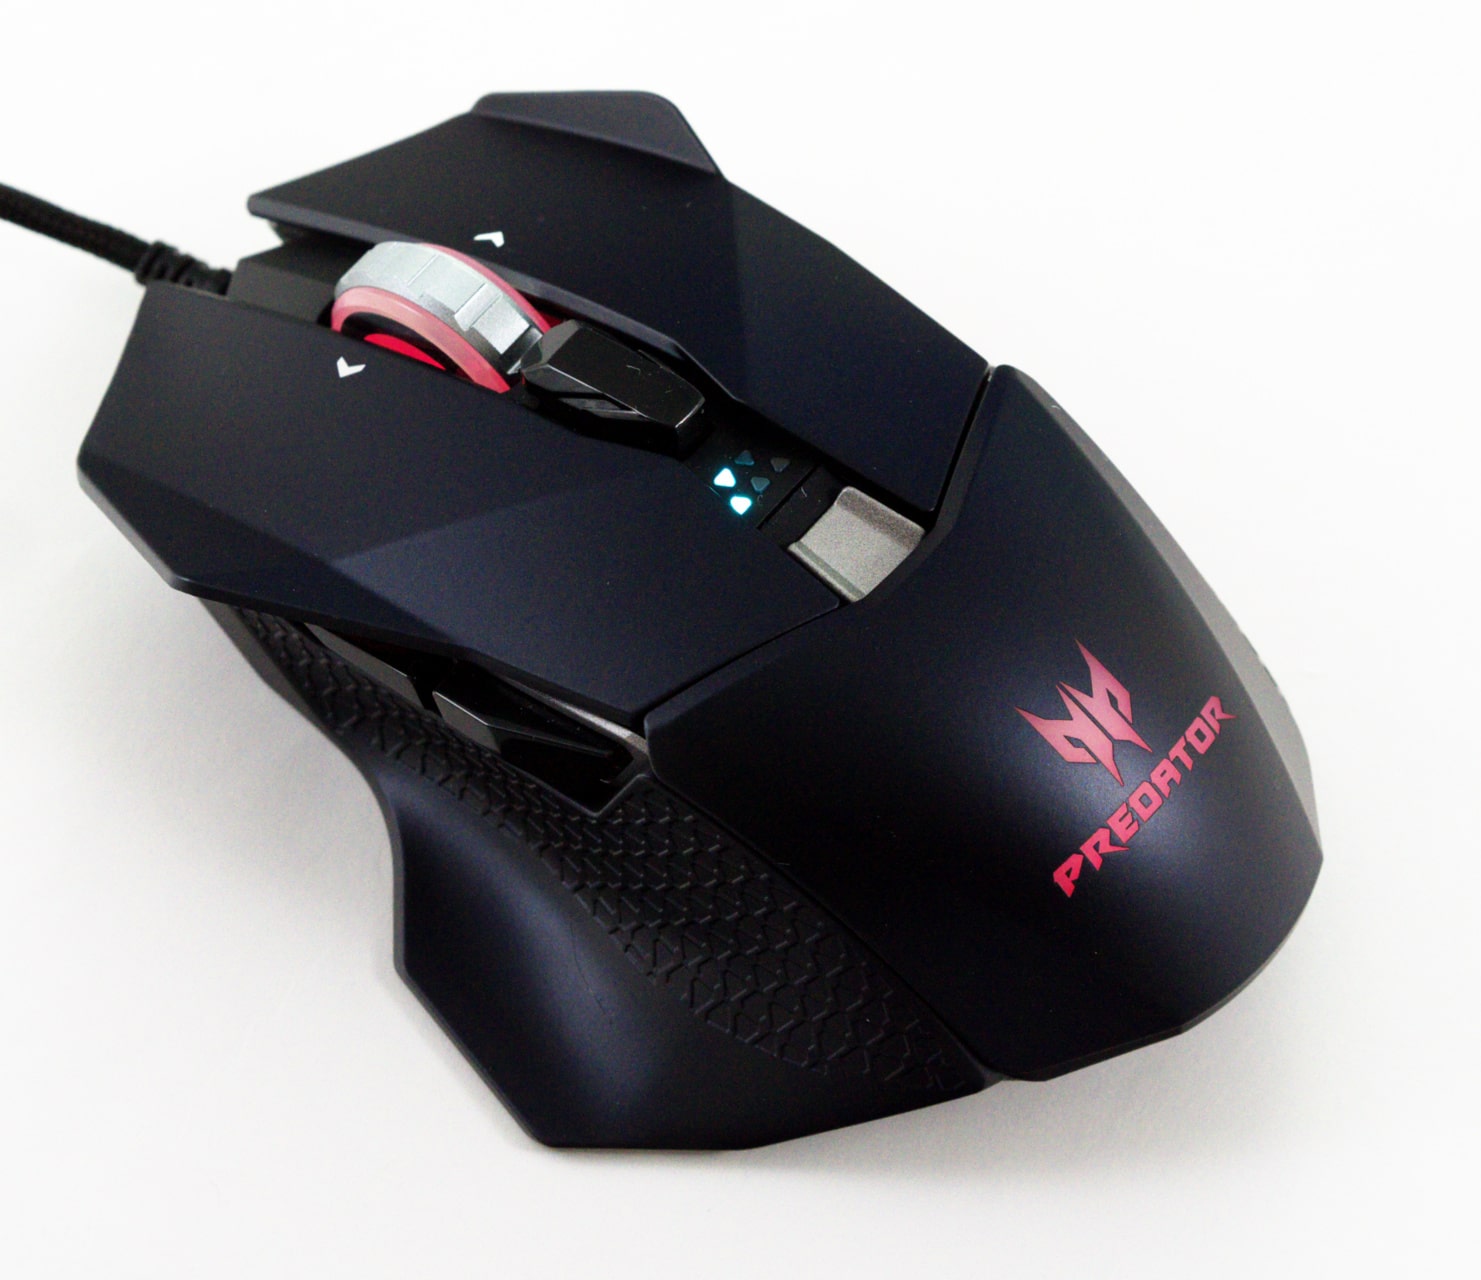 Acer Predator Cestus 510 Gaming Mouse Review